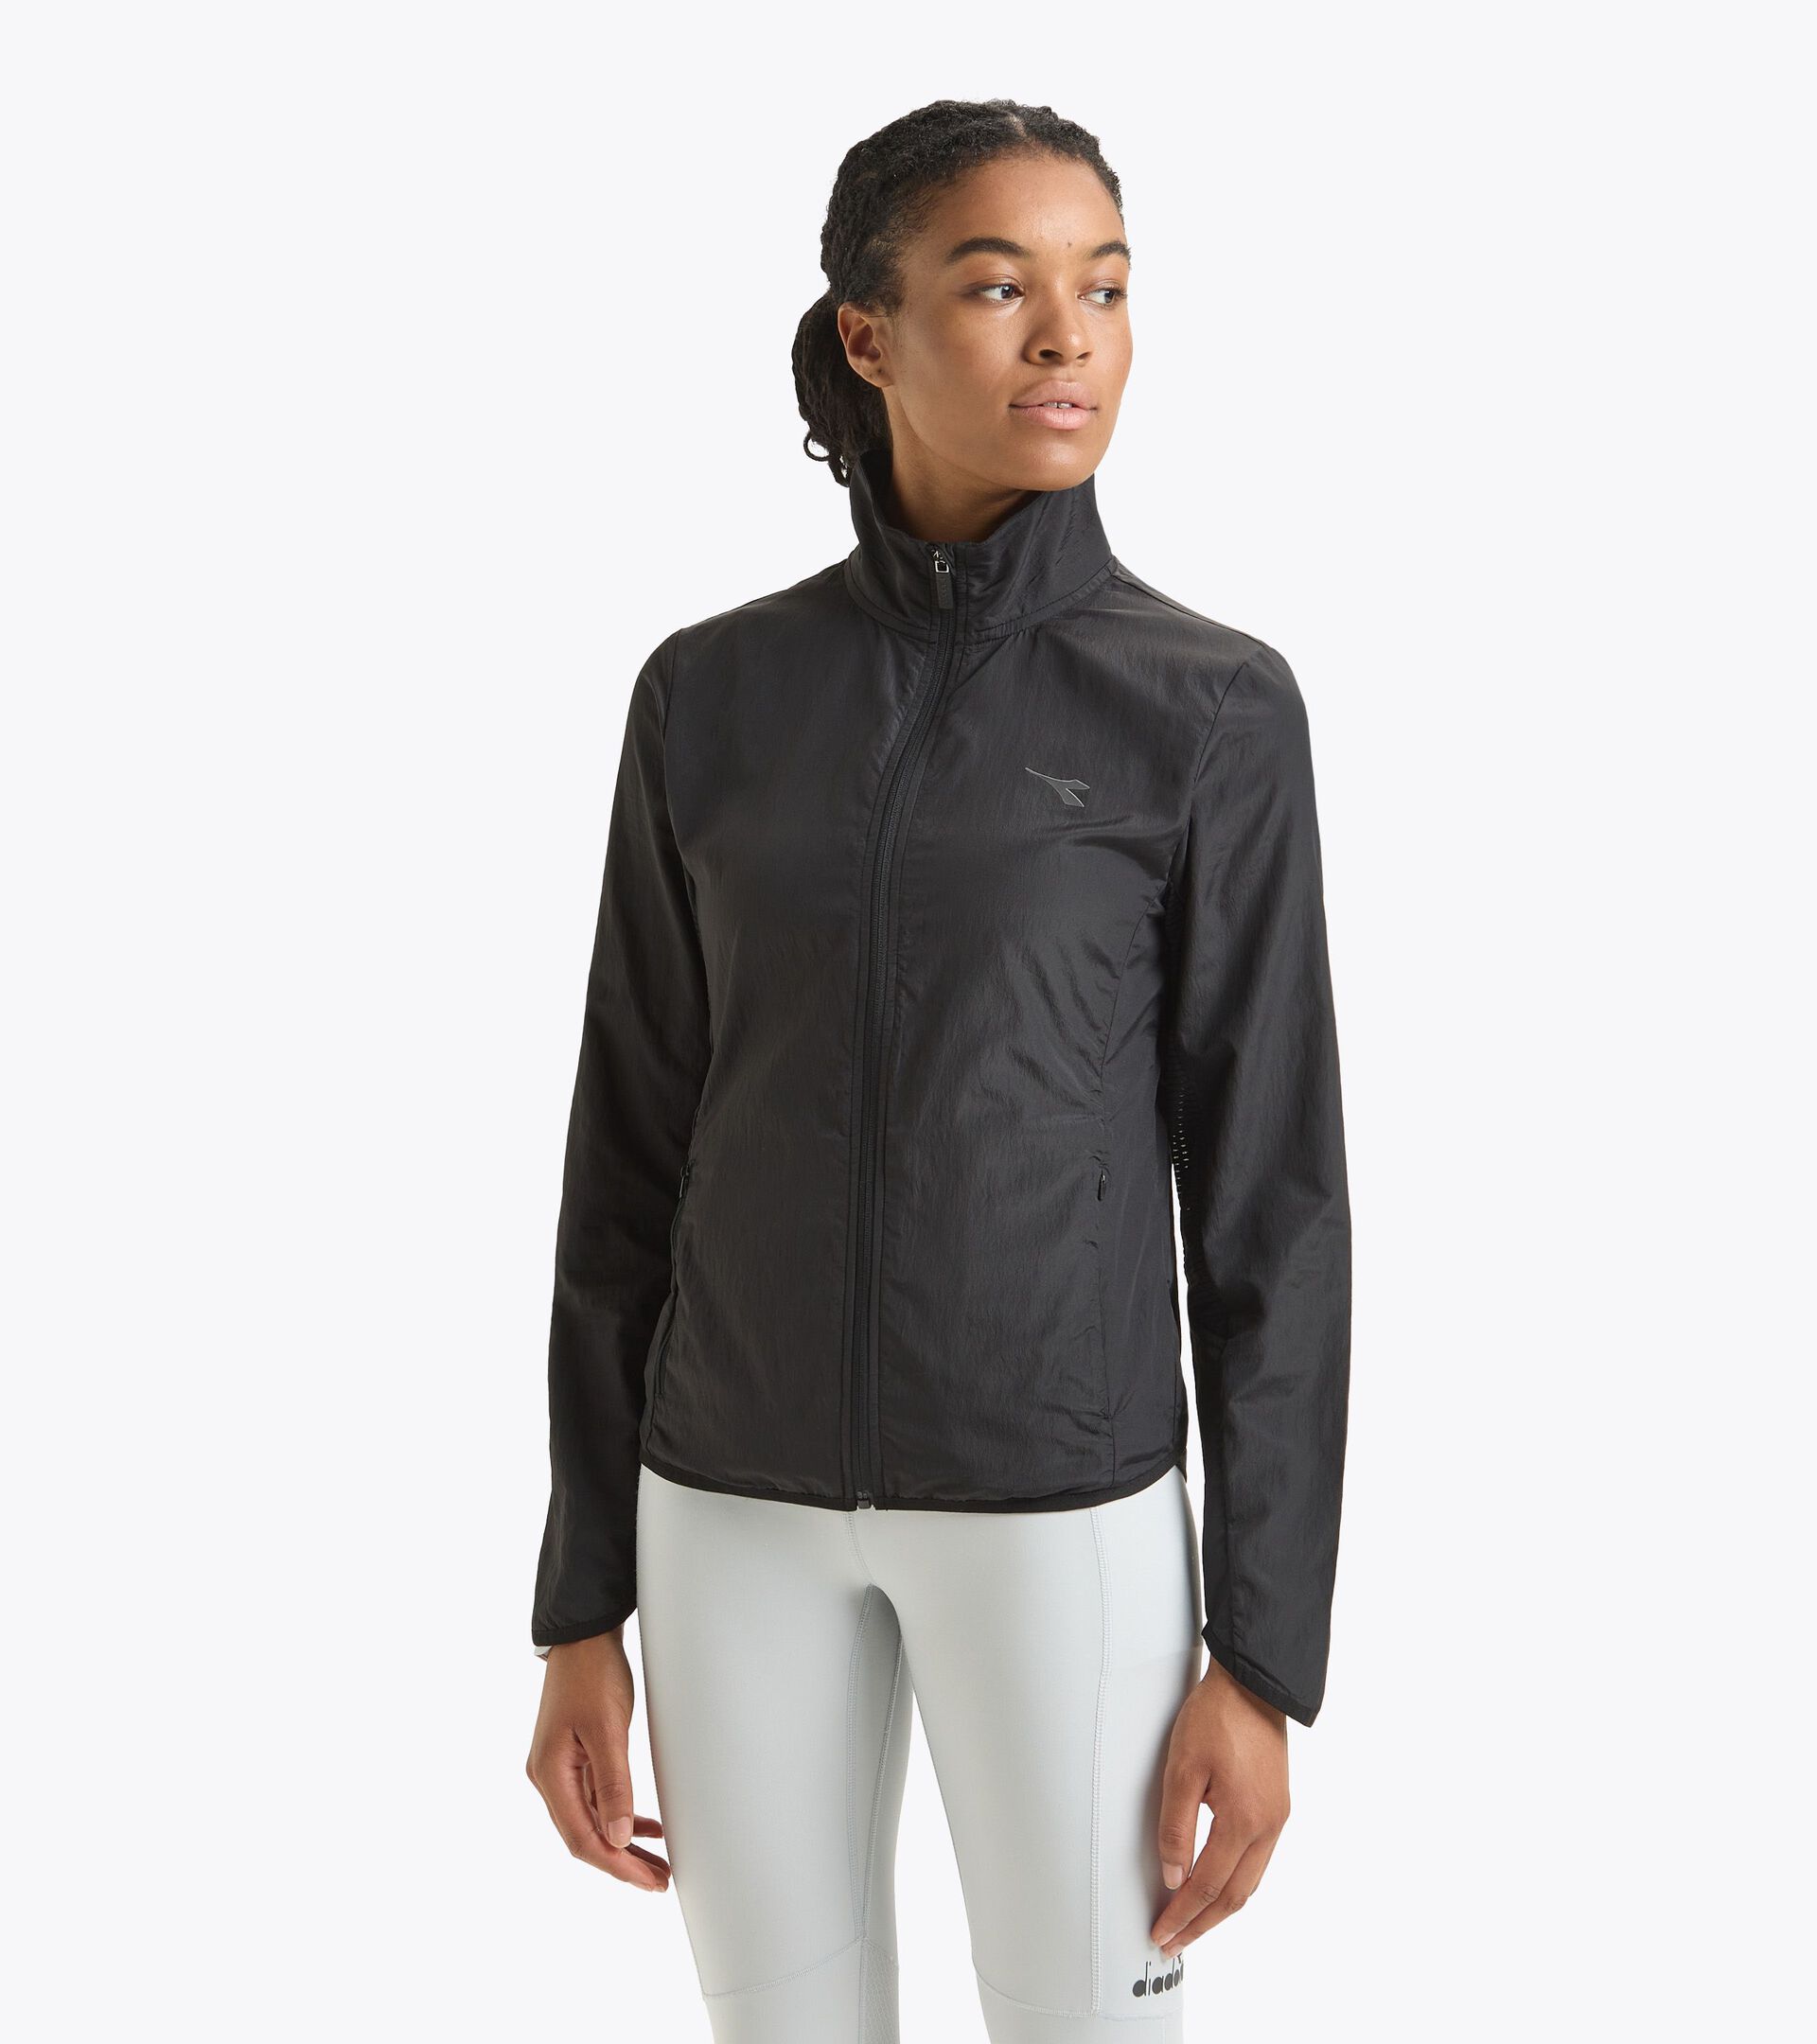 Windproof water-resistant jacket - Women L. WINDBREAKER BLACK - Diadora